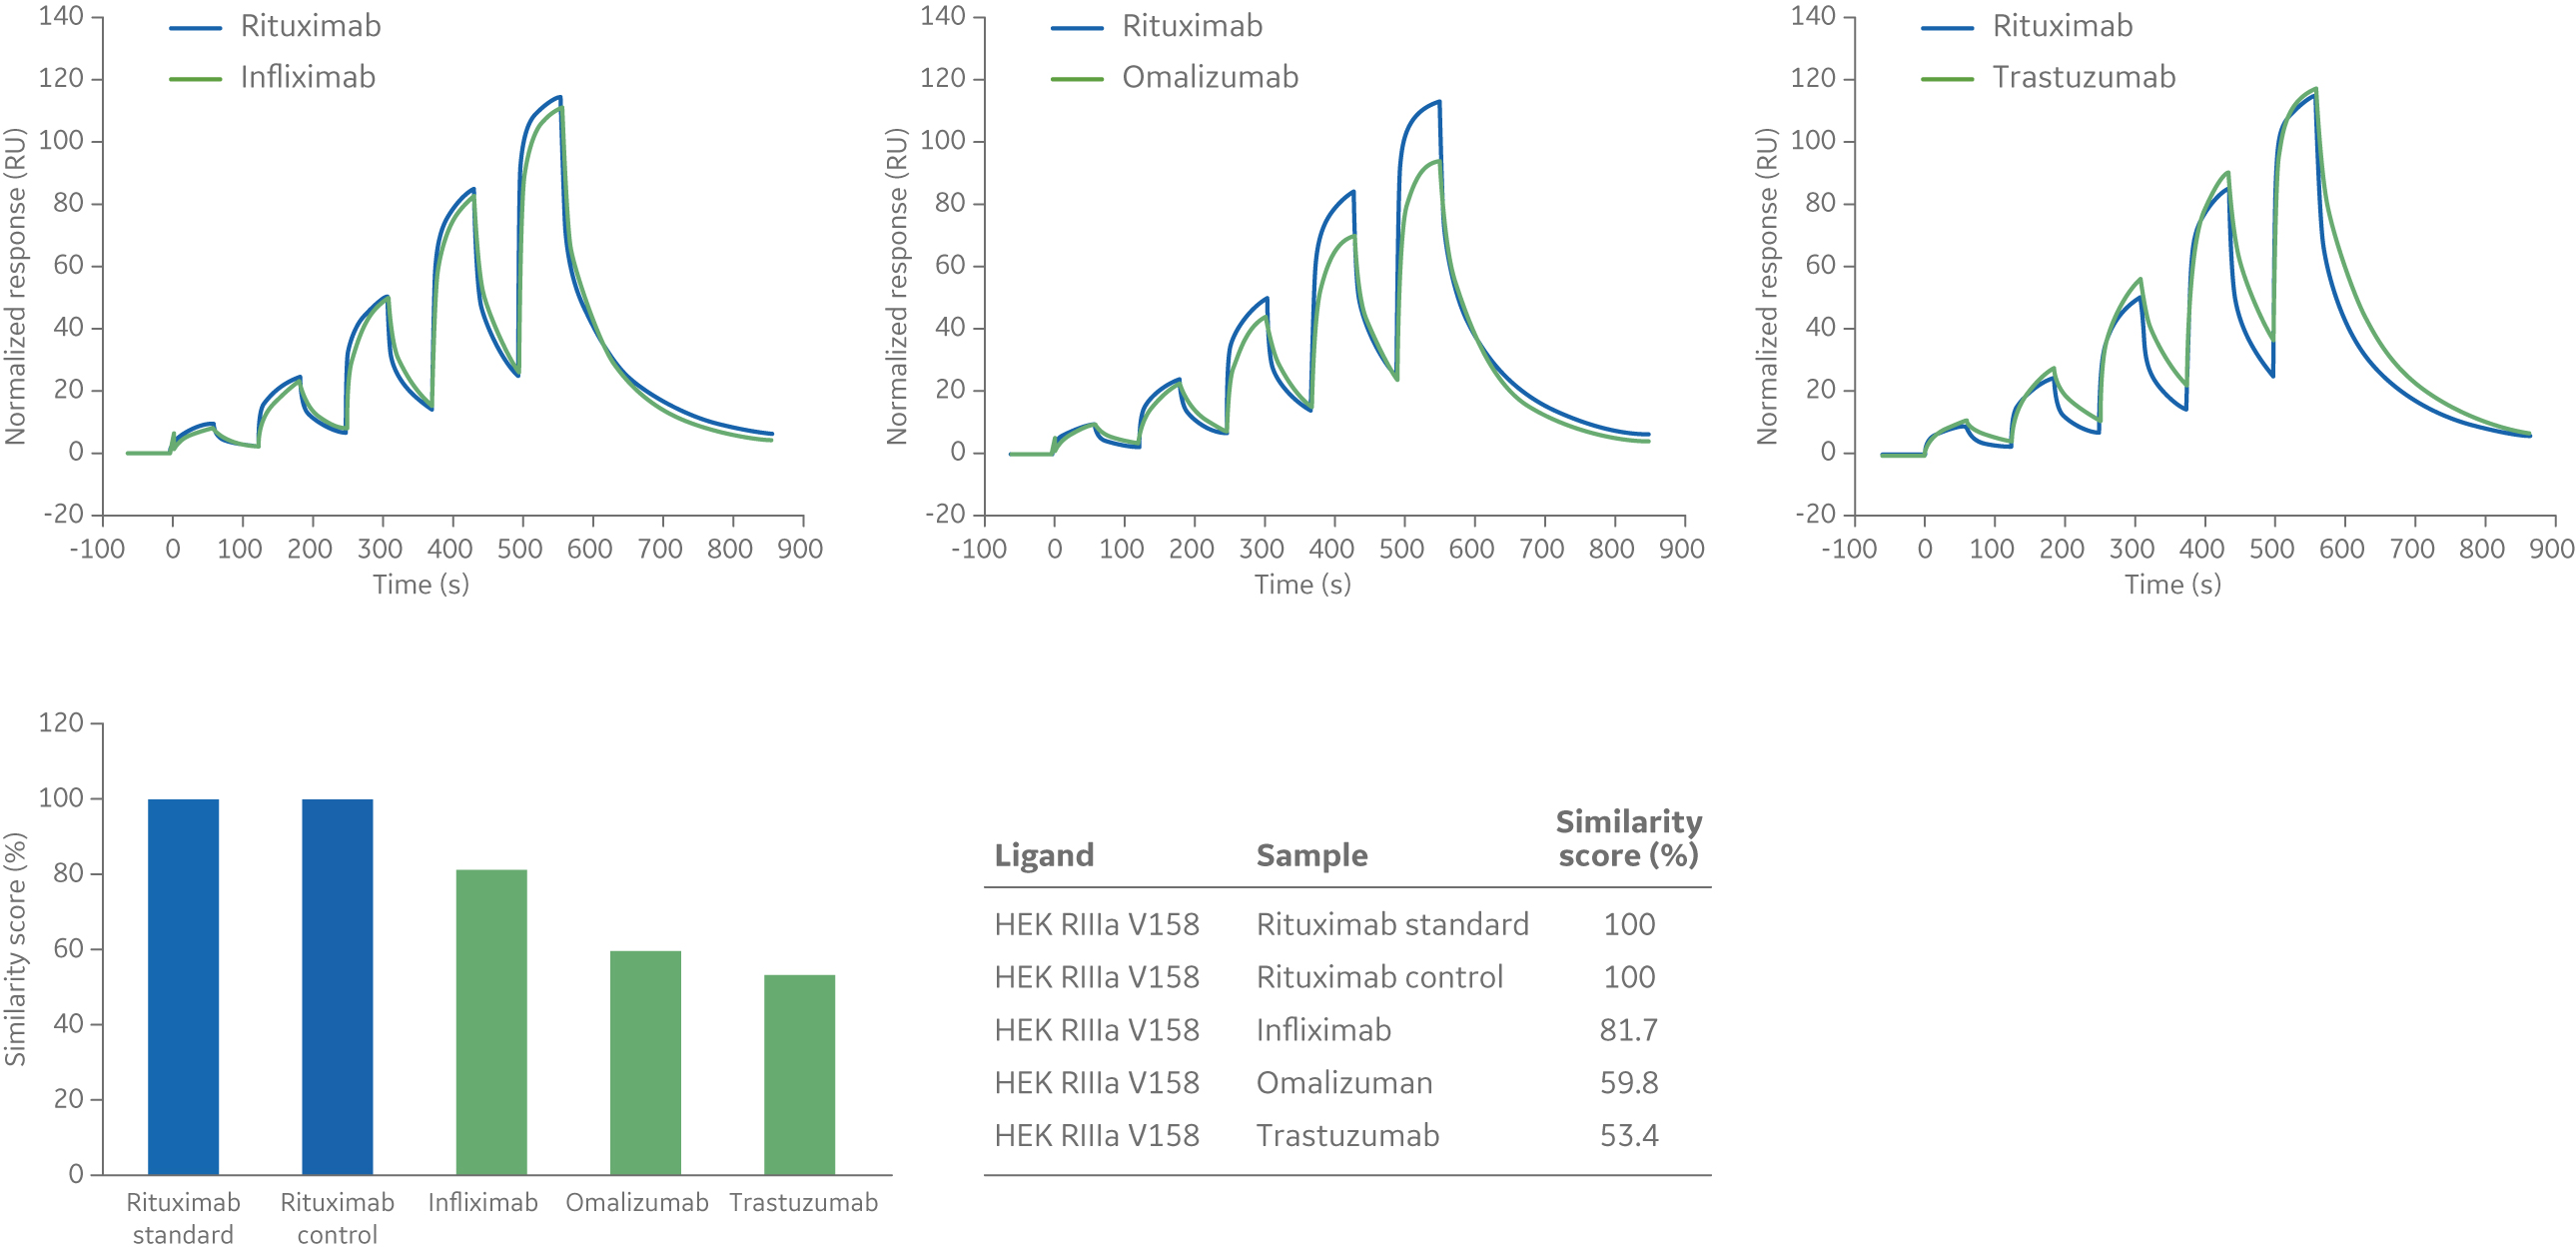 Biotherapeutics sensorgrams and similarity scores in comparison to a Rituximab standard 